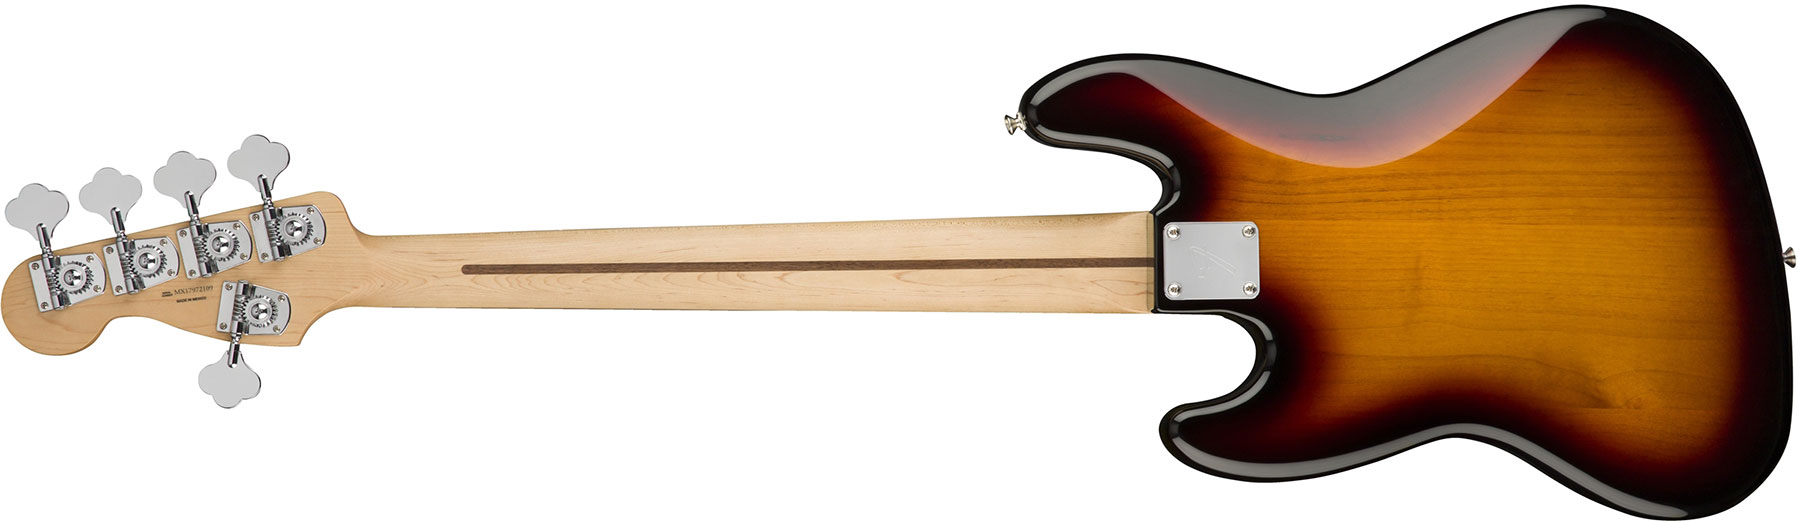 Fender Jazz Bass Player V 5-cordes Mex Pf - 3-color Sunburst - Solid body elektrische bas - Variation 1